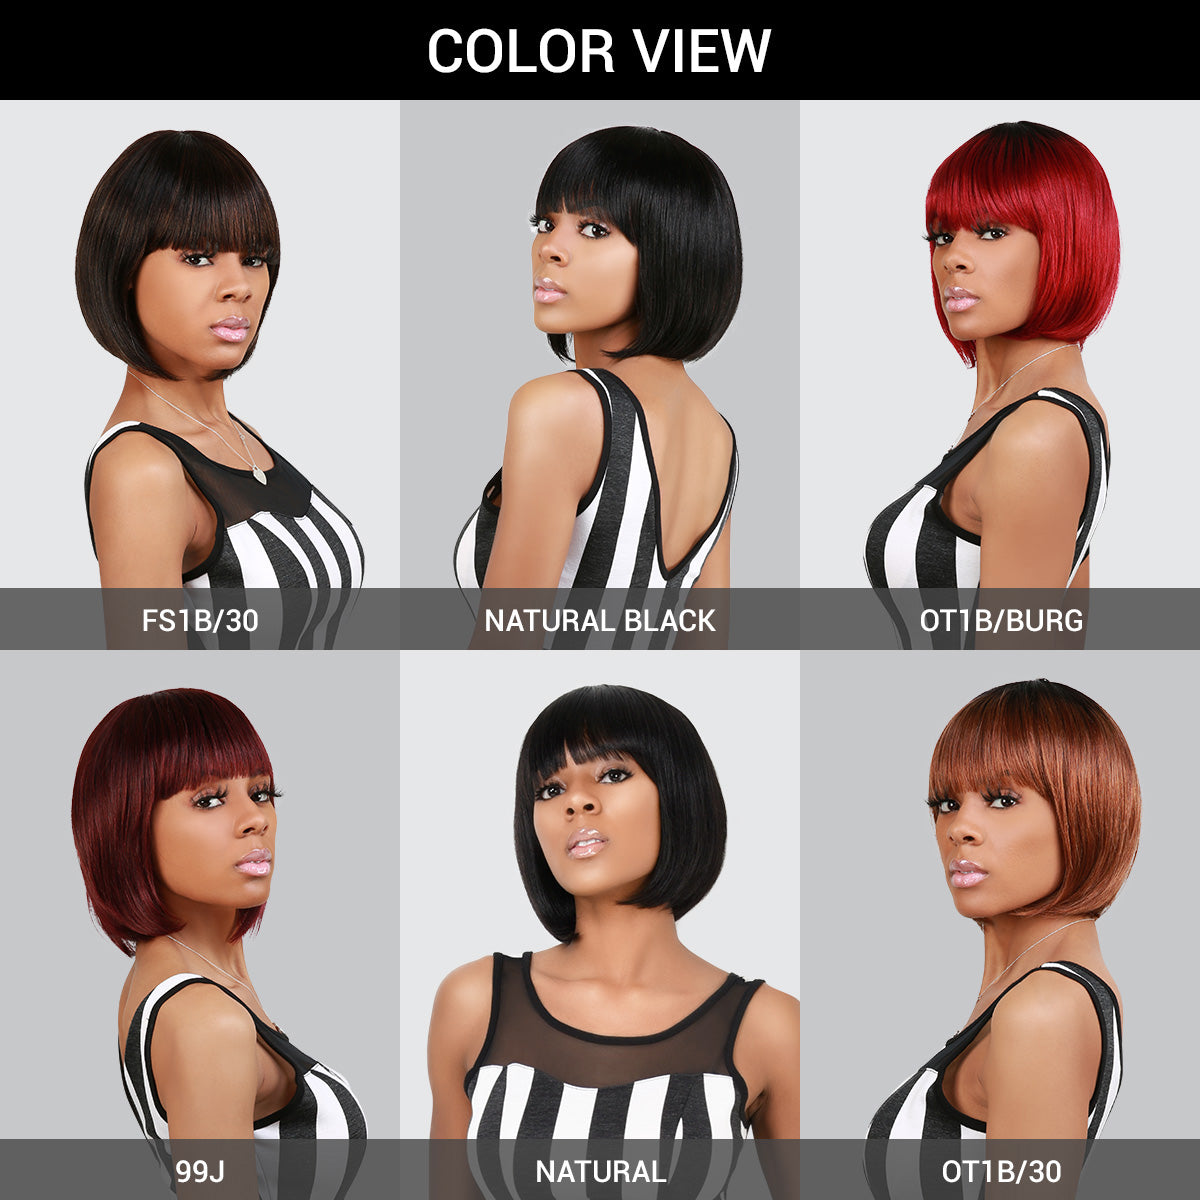 Human hair short bob wigs are available at alihairs.com in variety colors, FS1B/30, natural black, burgundy, dark auburn burgundy, OT1B/30